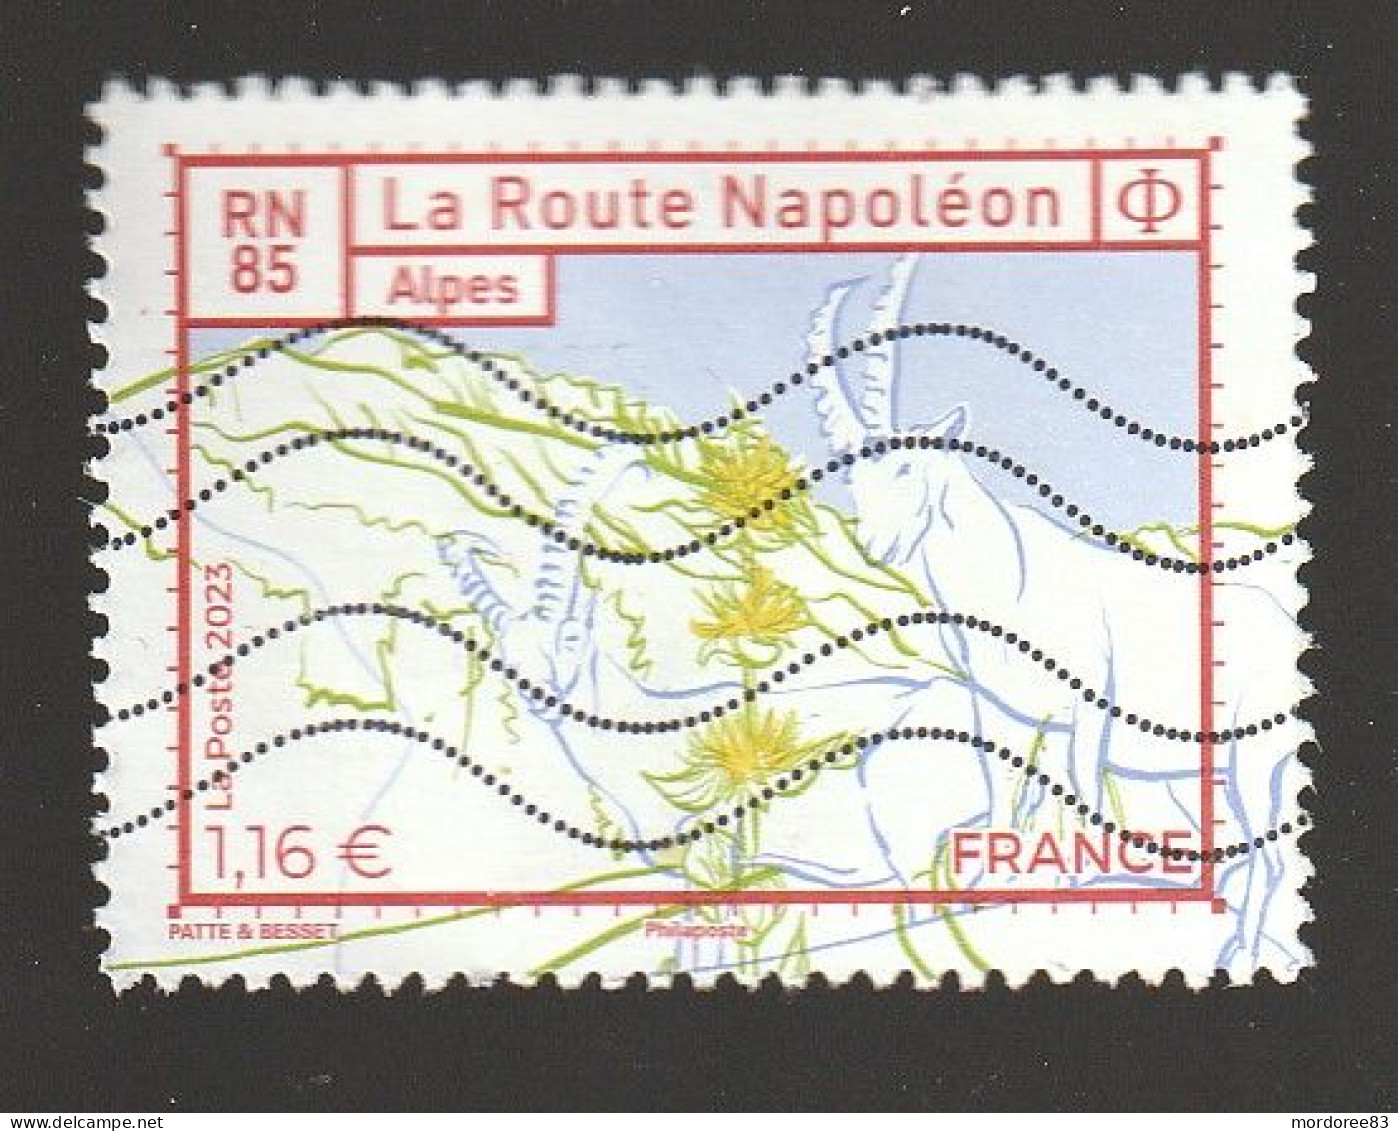 FRANCE 2023 LA ROUTE NAPOLEON ALPES OBLITERE - Gebruikt